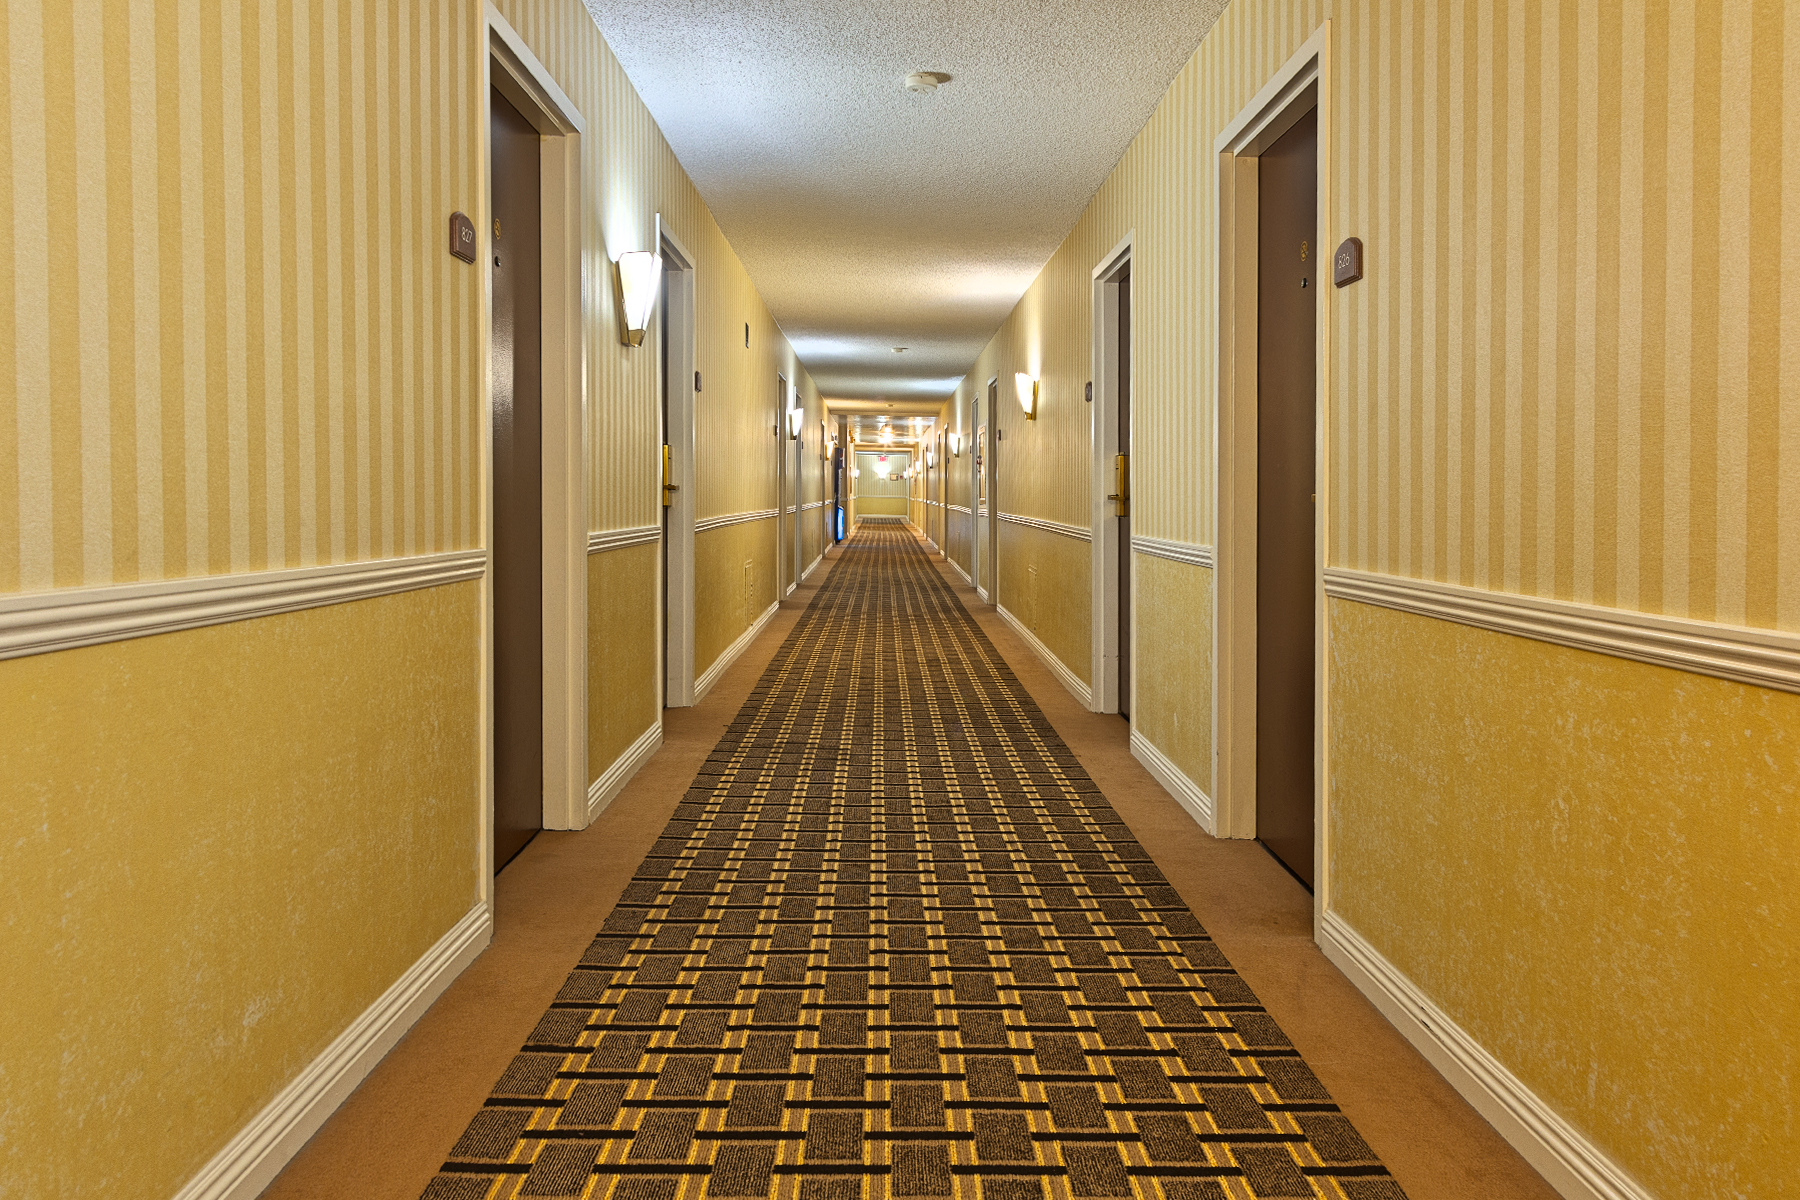 Illuminated corridor - hdr photo